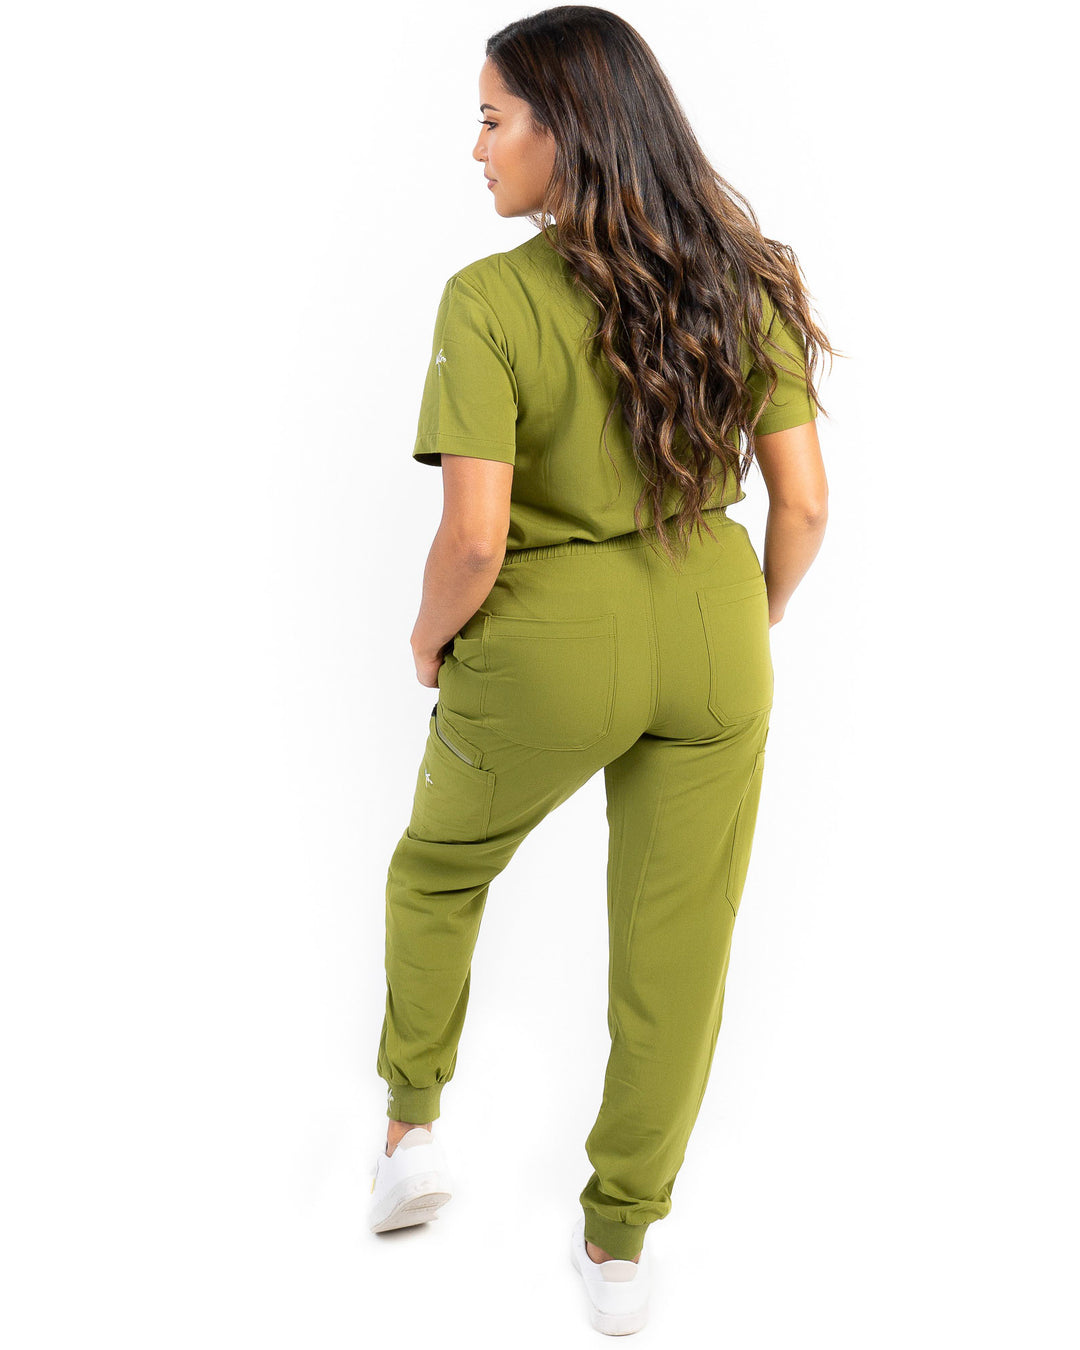 women's Olive Scrub Pants - Jogger Scrubs by Millennials In Medicine (Mim Scrubs)